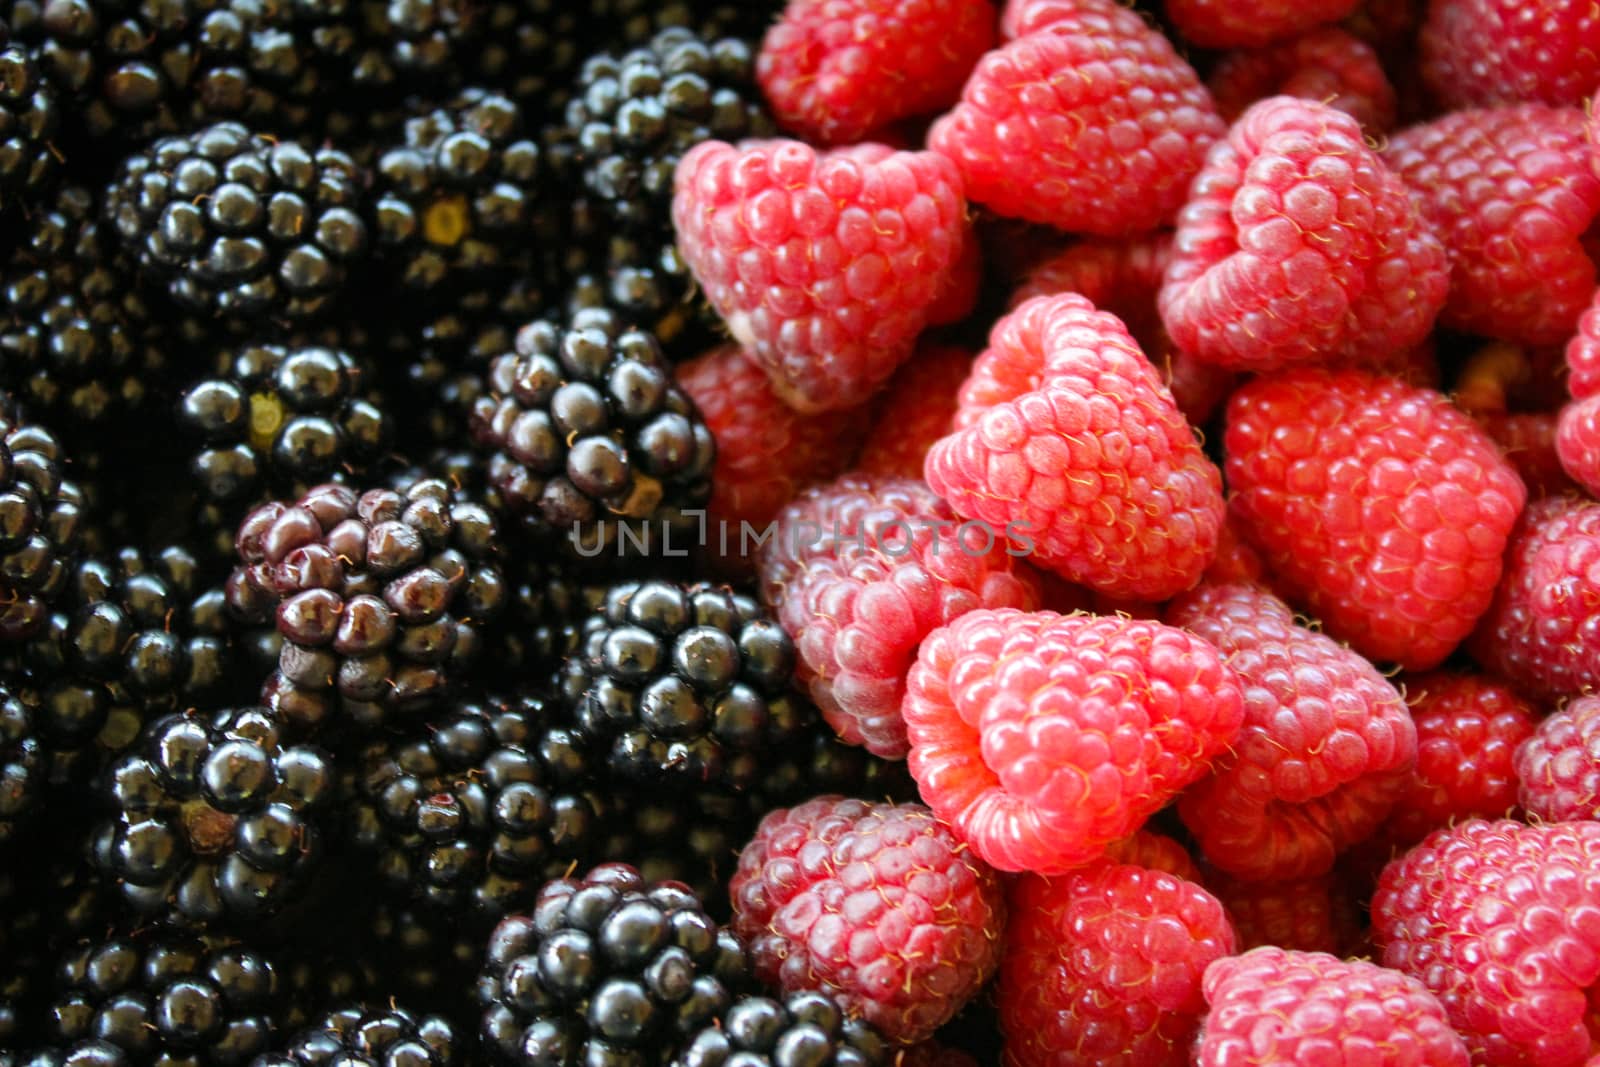 Full frame of blackberries and raspberries. On the left side blackberries and on the right side raspberries. by mahirrov